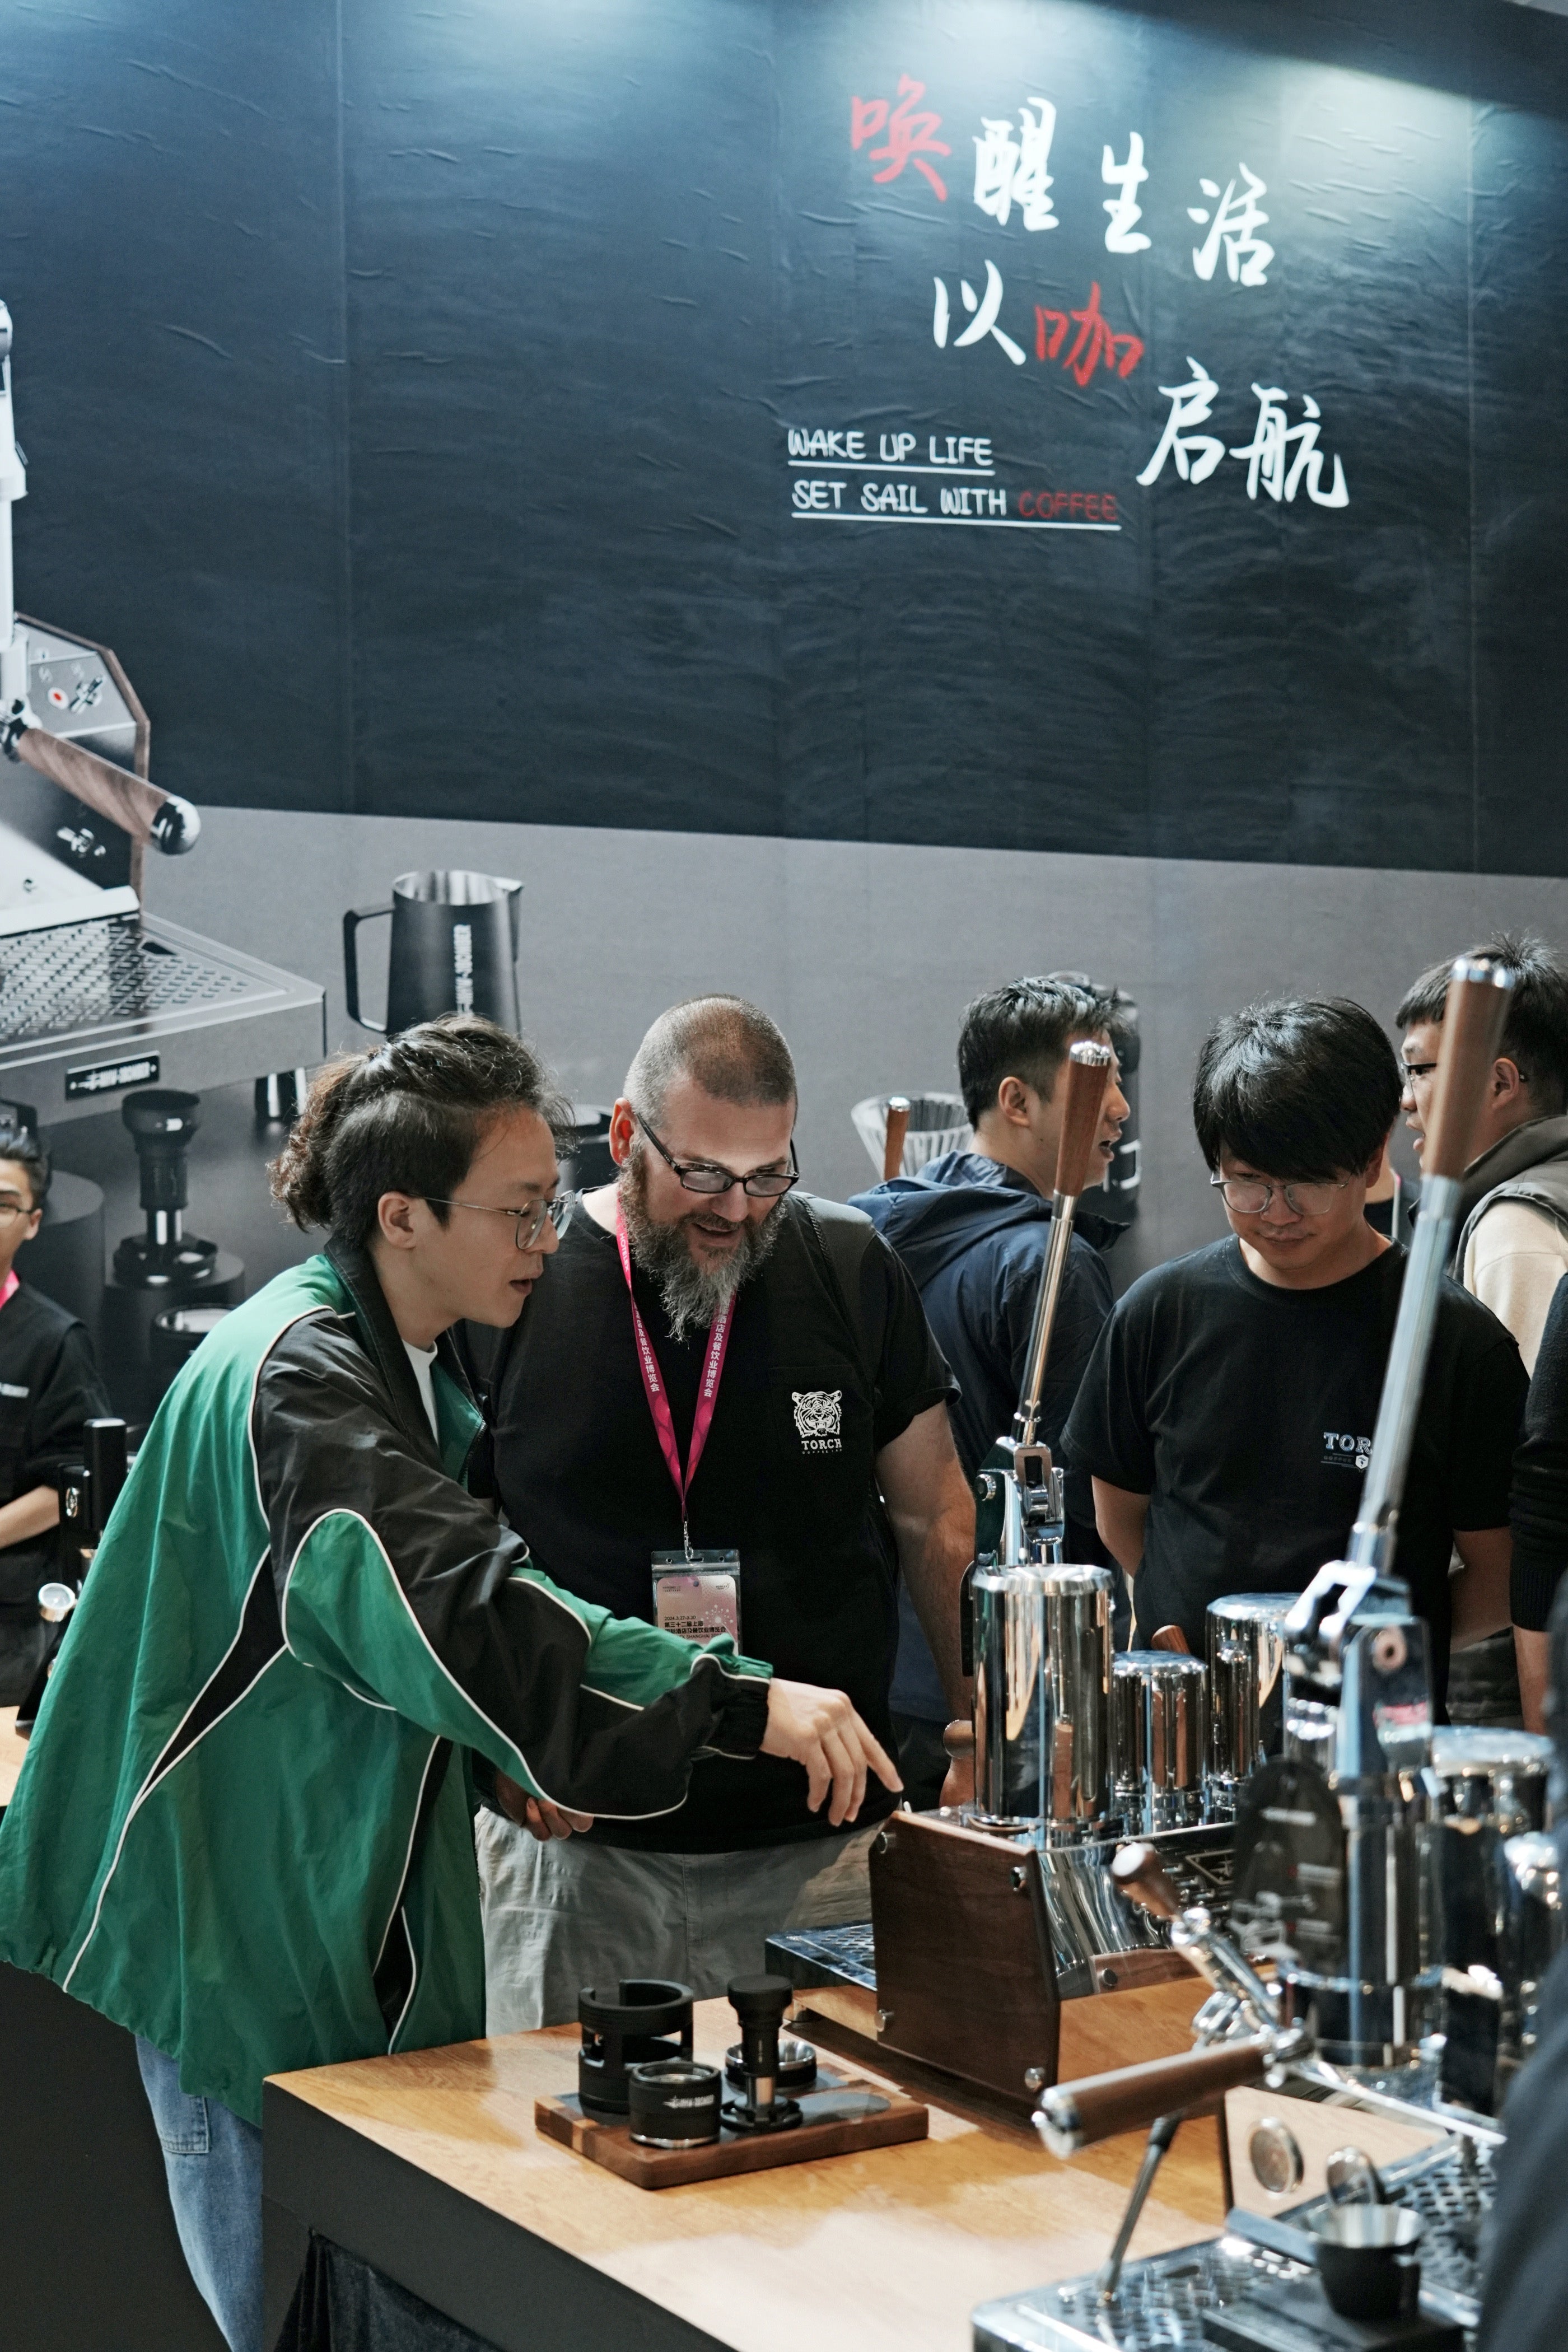 Shanghai CAFEEX Exhibition